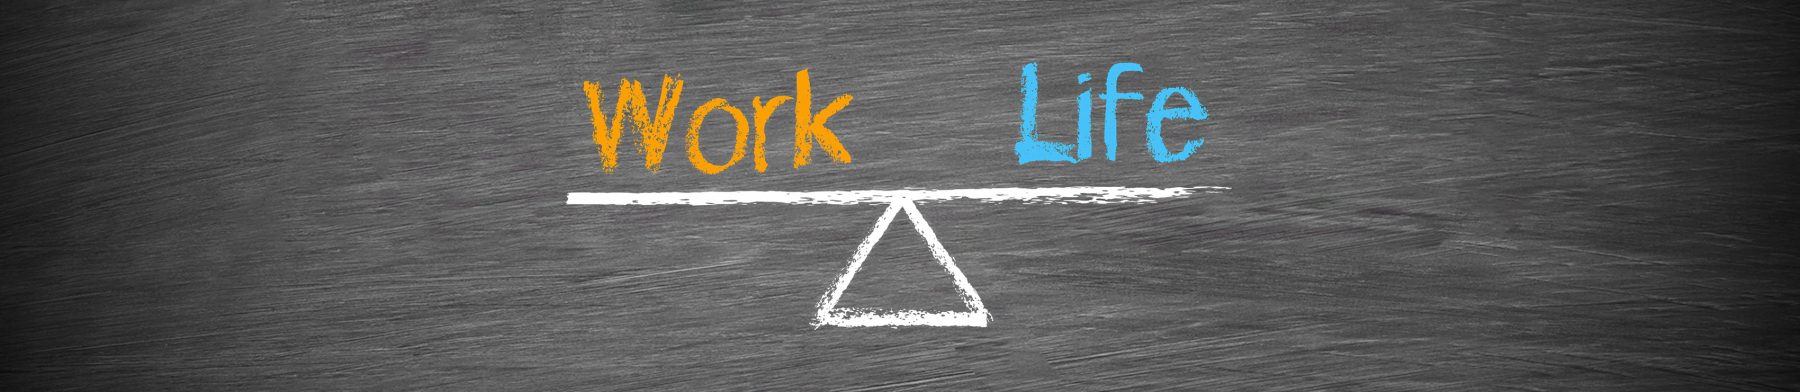 Benefits & Work-Life Balance